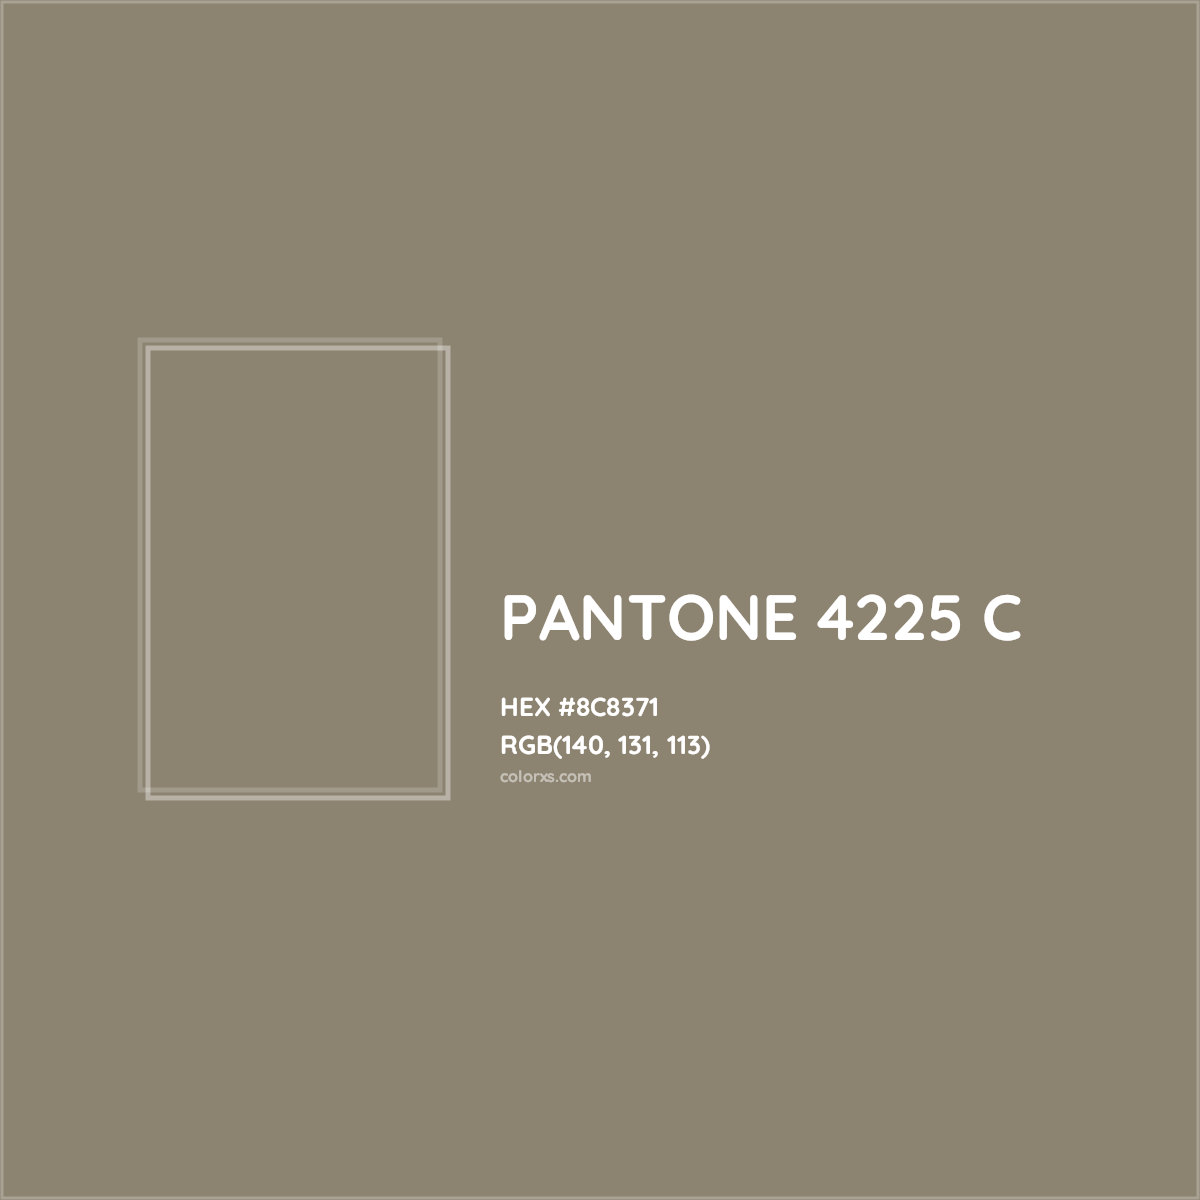 HEX #8C8371 PANTONE 4225 C CMS Pantone PMS - Color Code